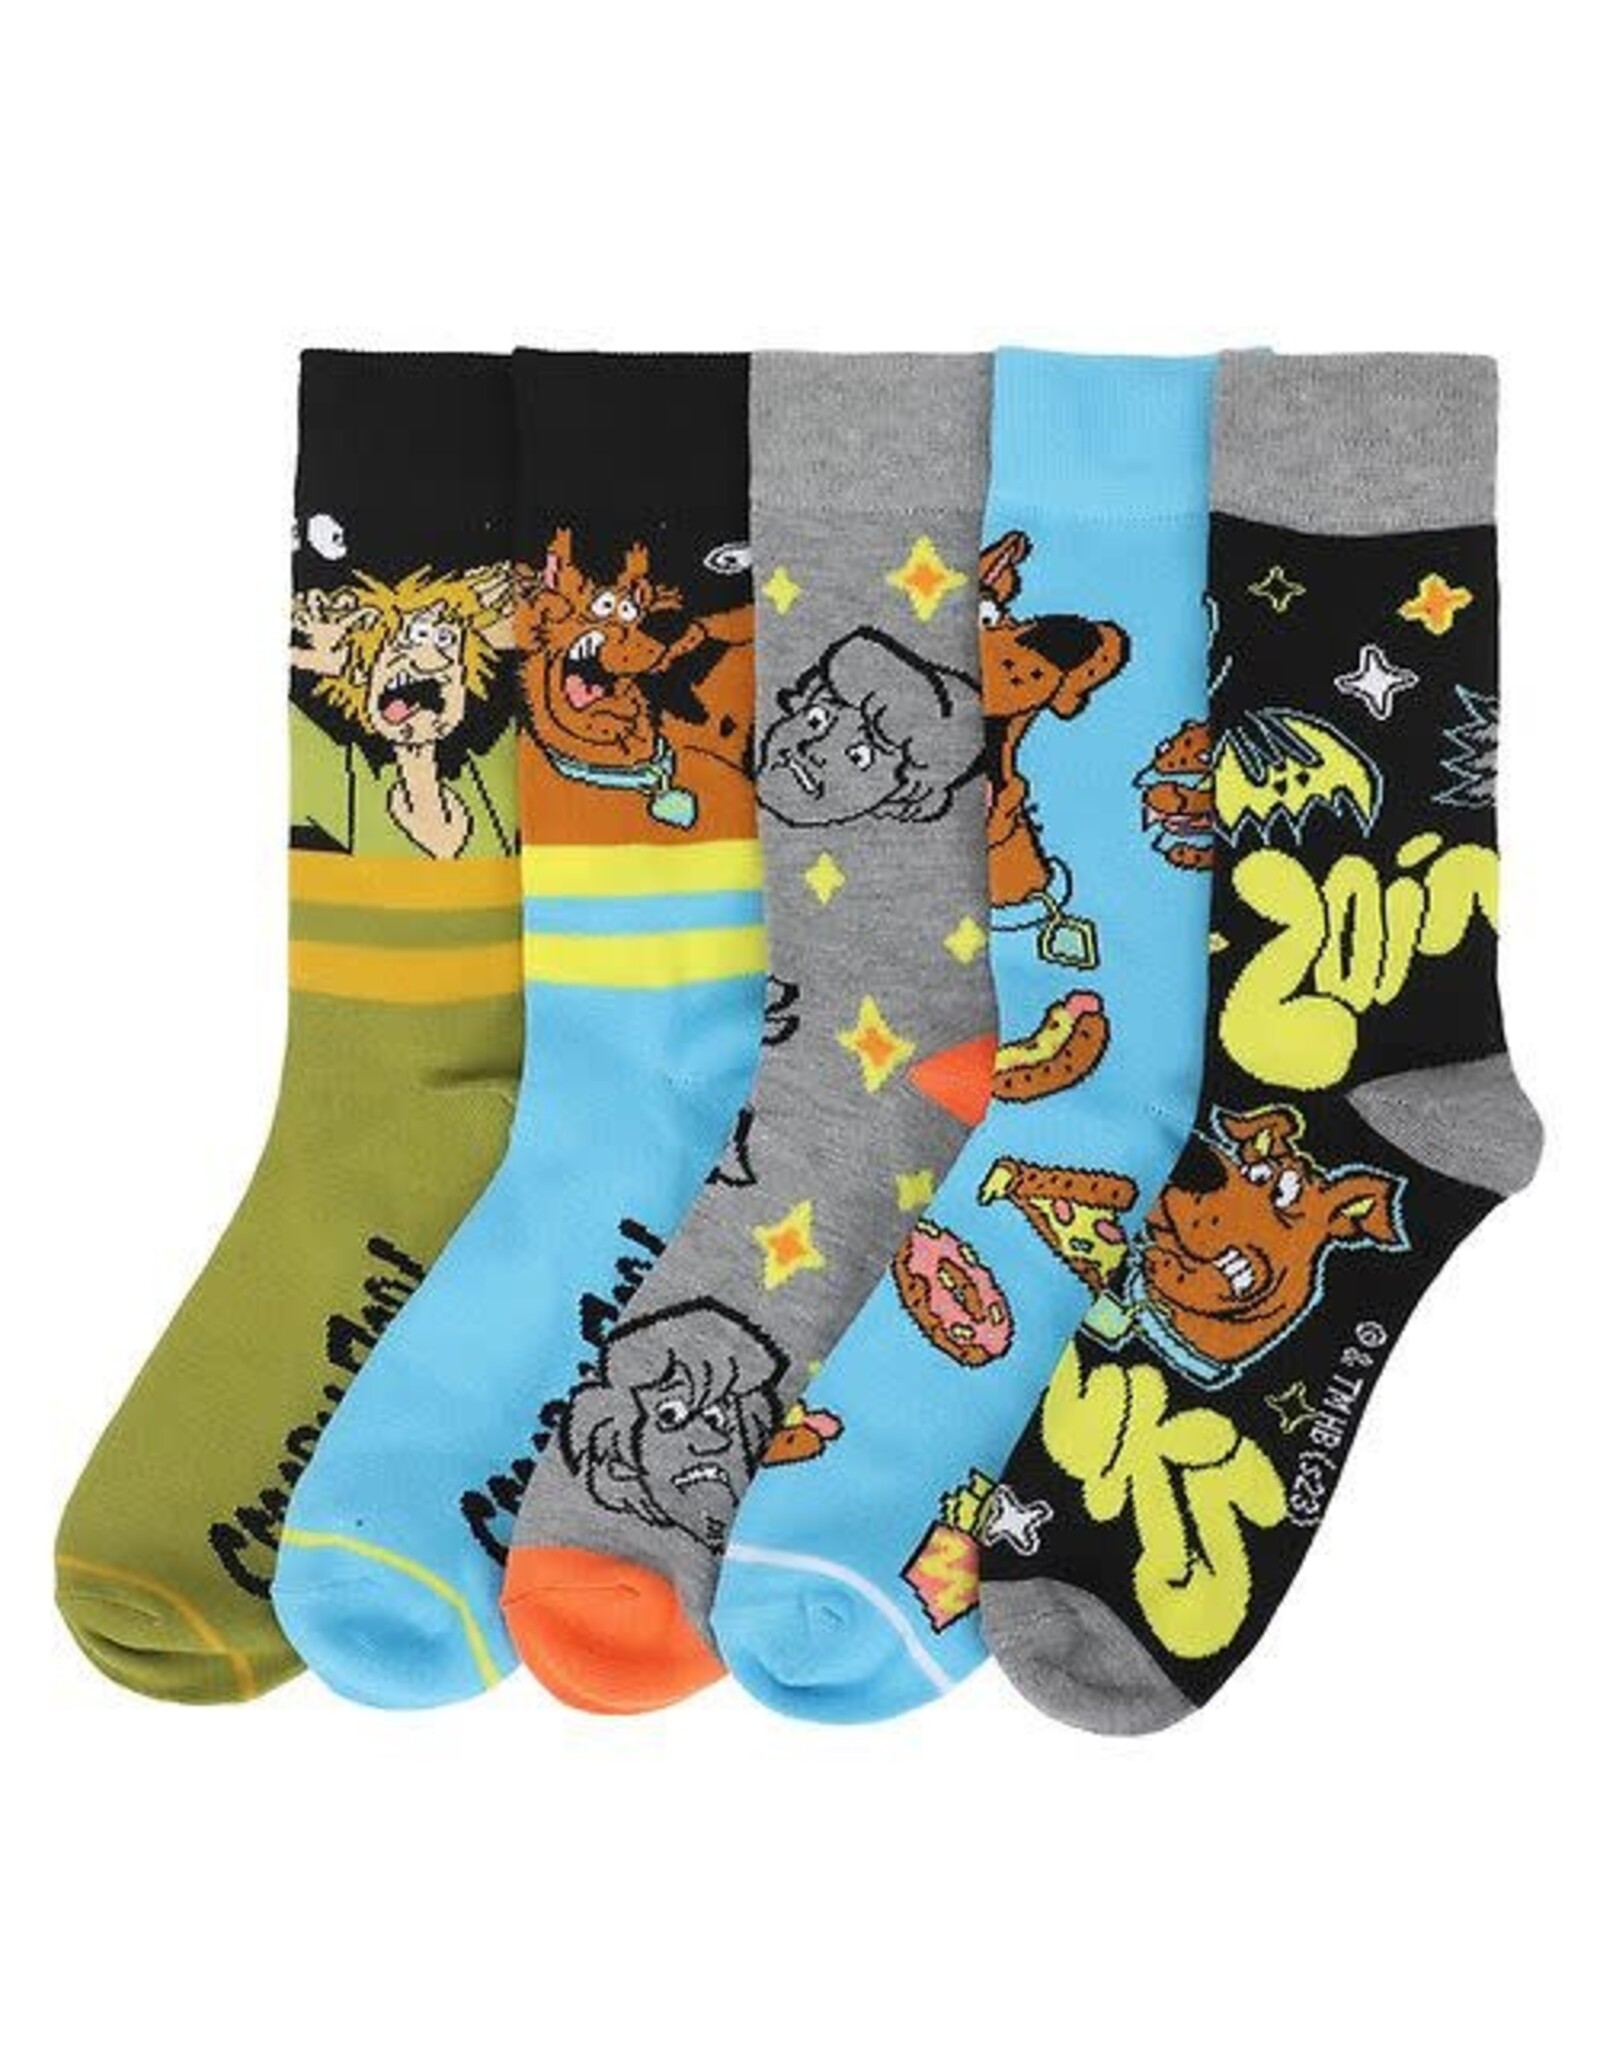 Bioworld Scooby -Doo Crew Socks (5 Pack)